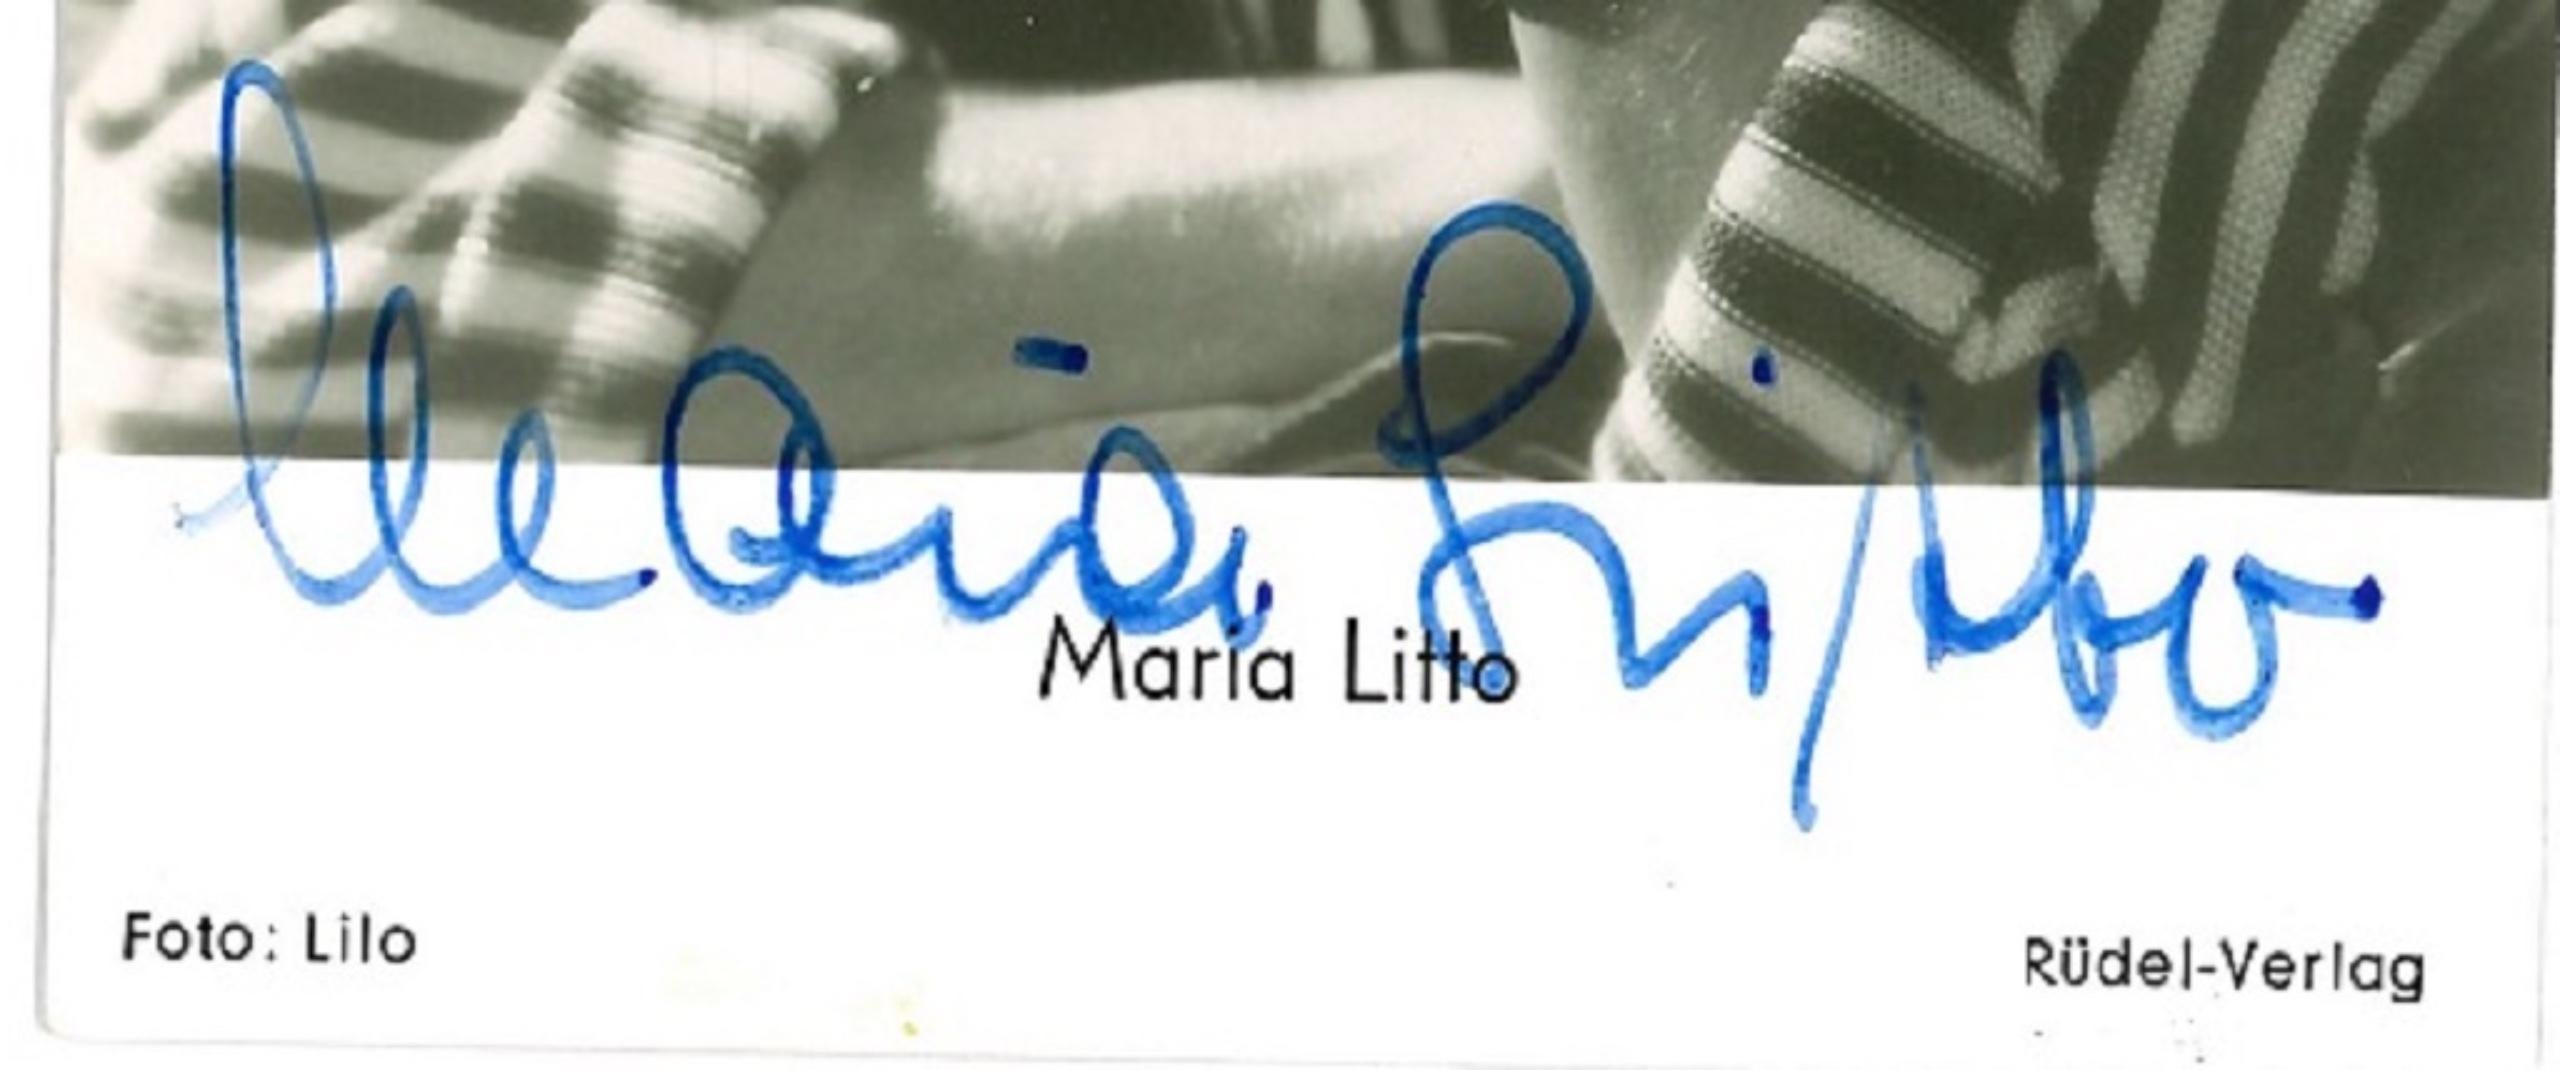 Autographed Portrait of Maria Litto - Original b/w Postcard - 1950s - Photograph by Unknown